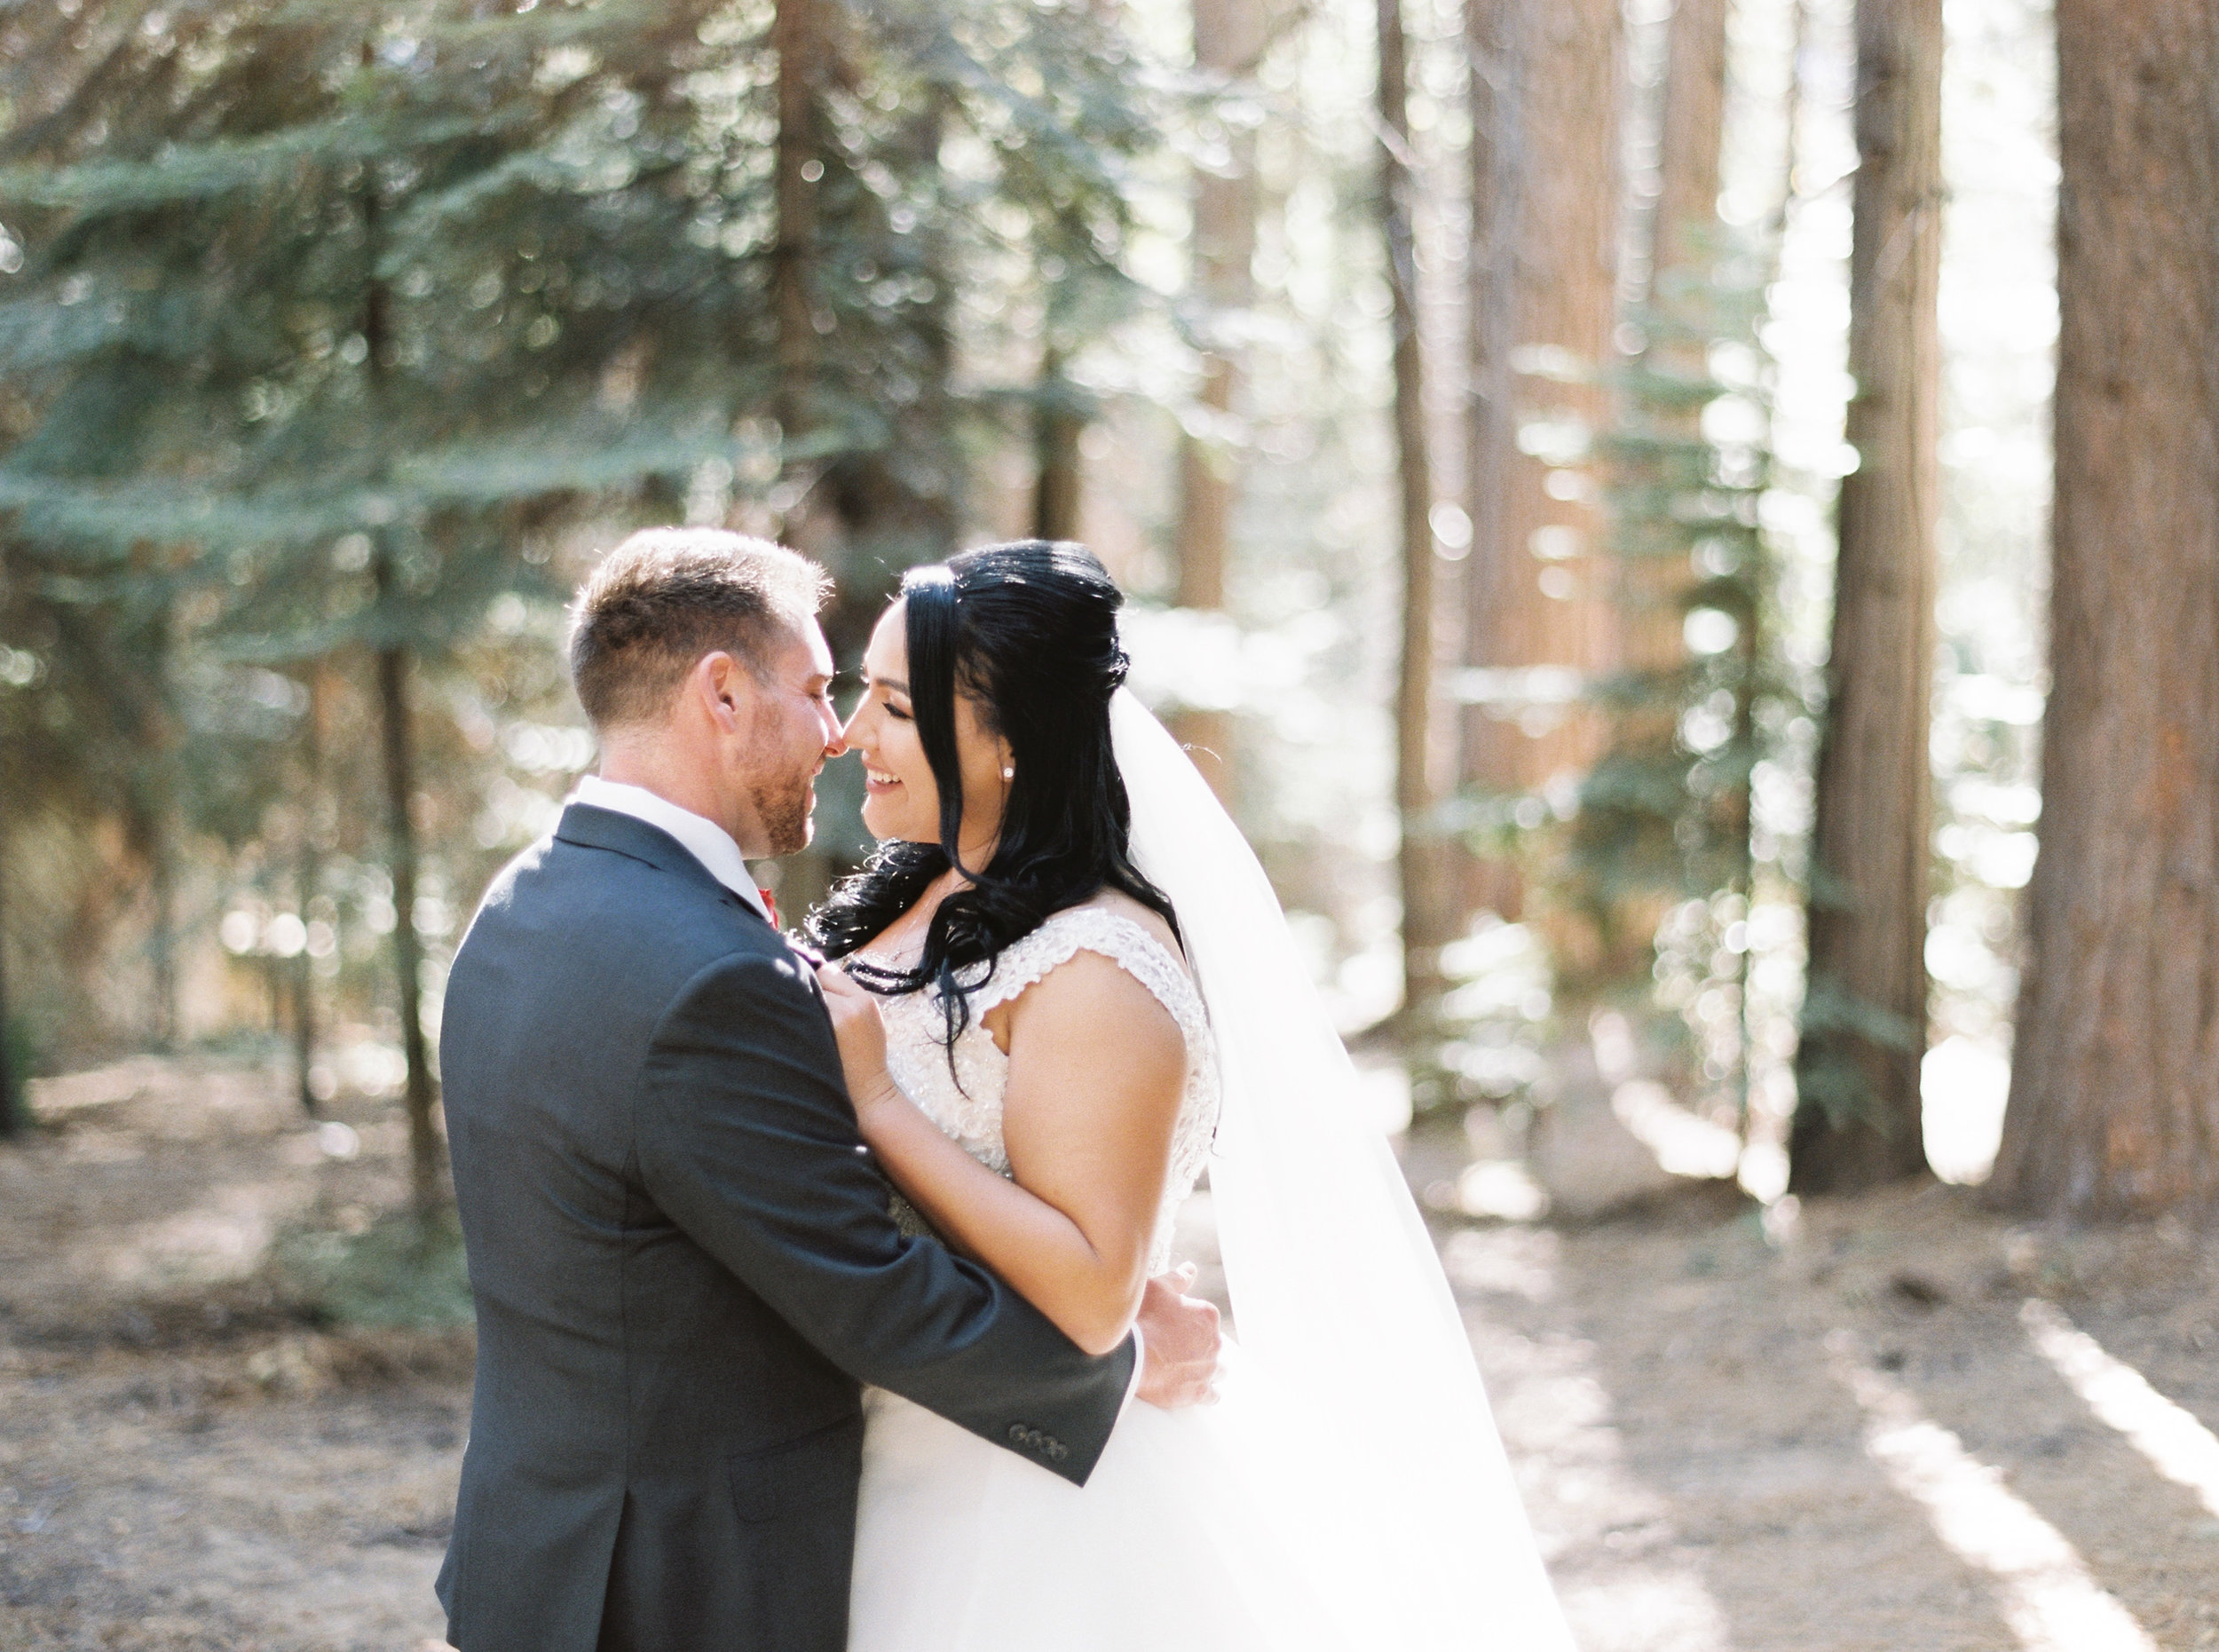 Tenaya-lodge-wedding-at-yosemite-national-park-california-27.jpg